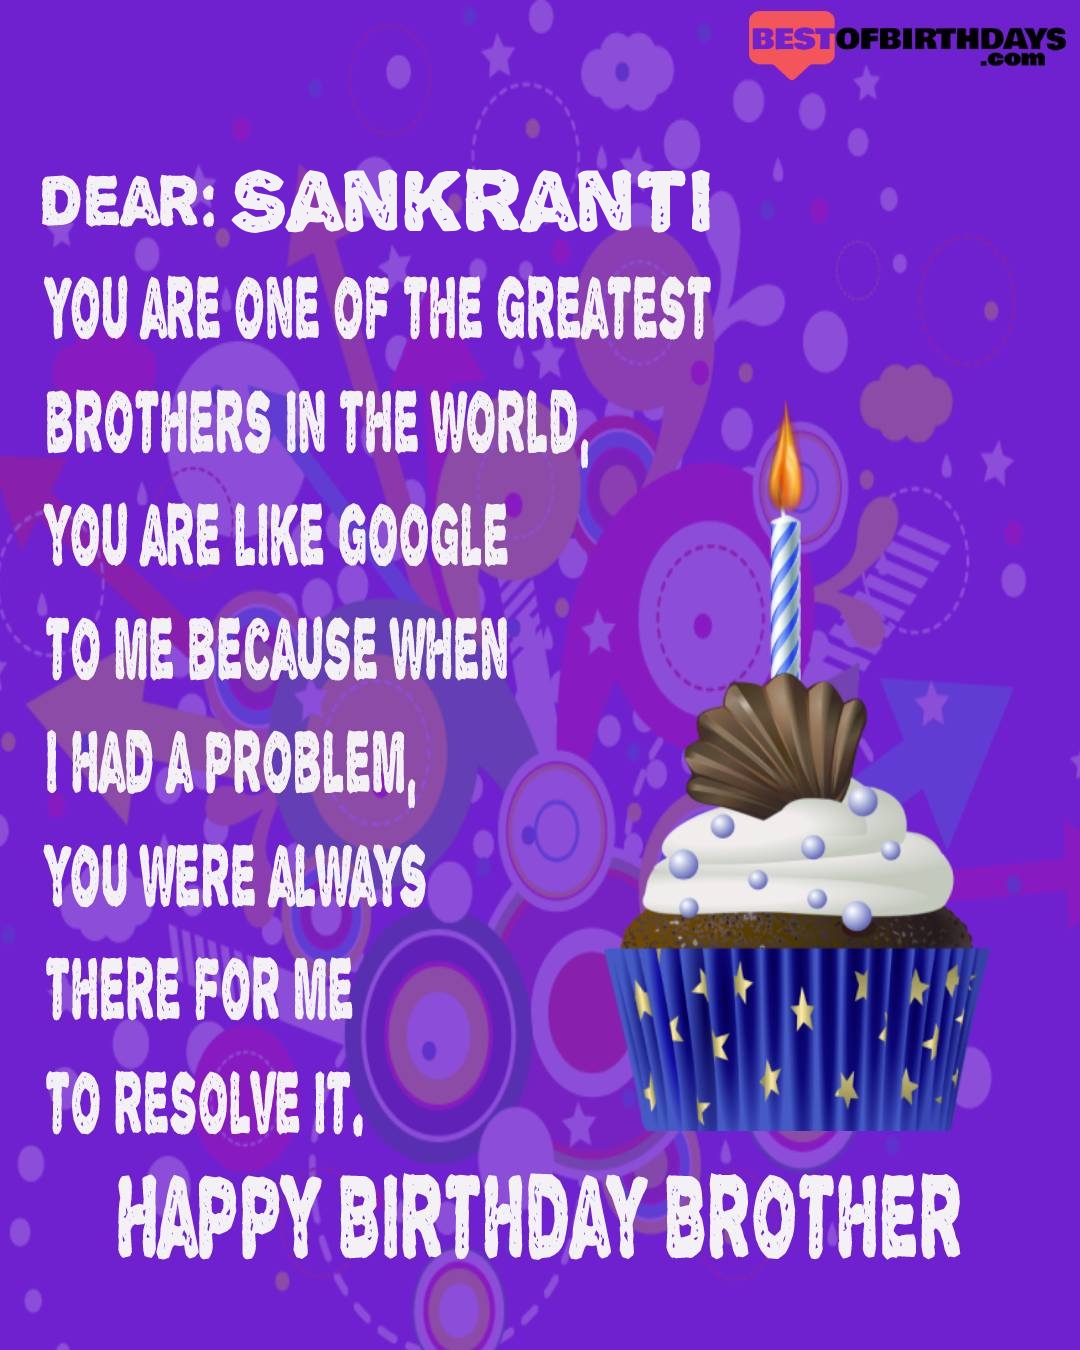 Happy birthday sankranti bhai brother bro